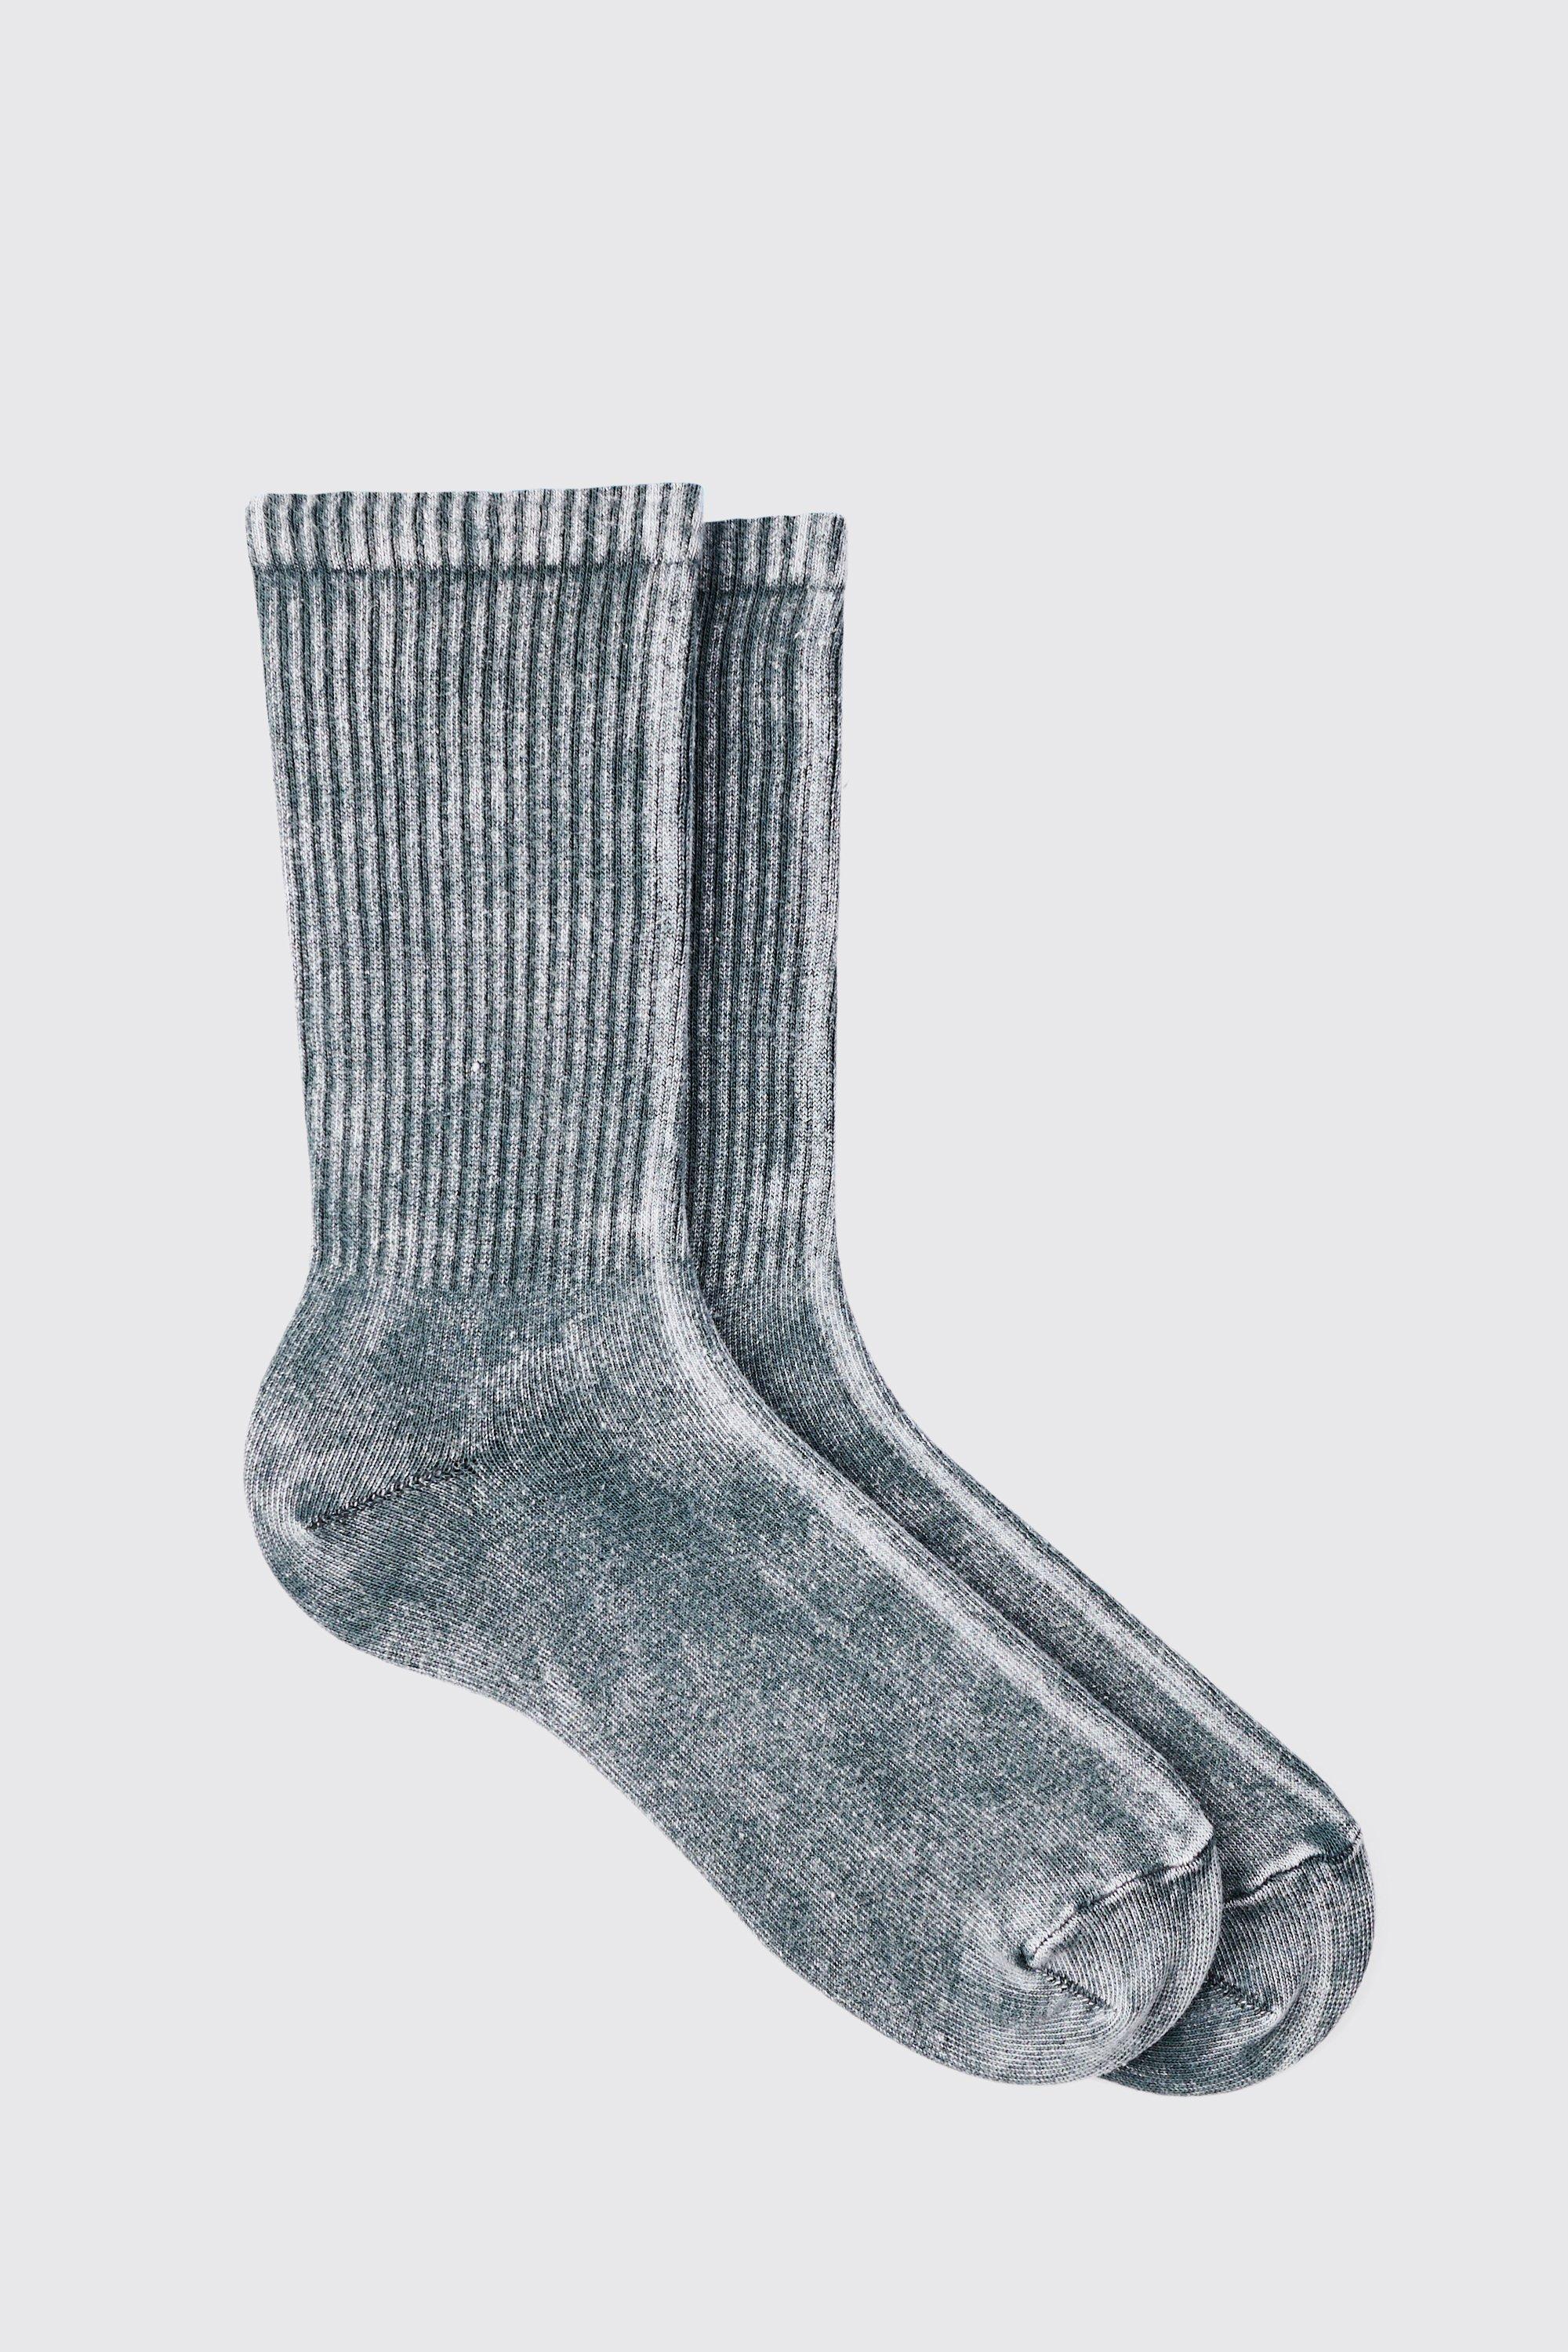 Image of Acid Wash Plain Ribbed Sports Socks In Charcoal, Grigio